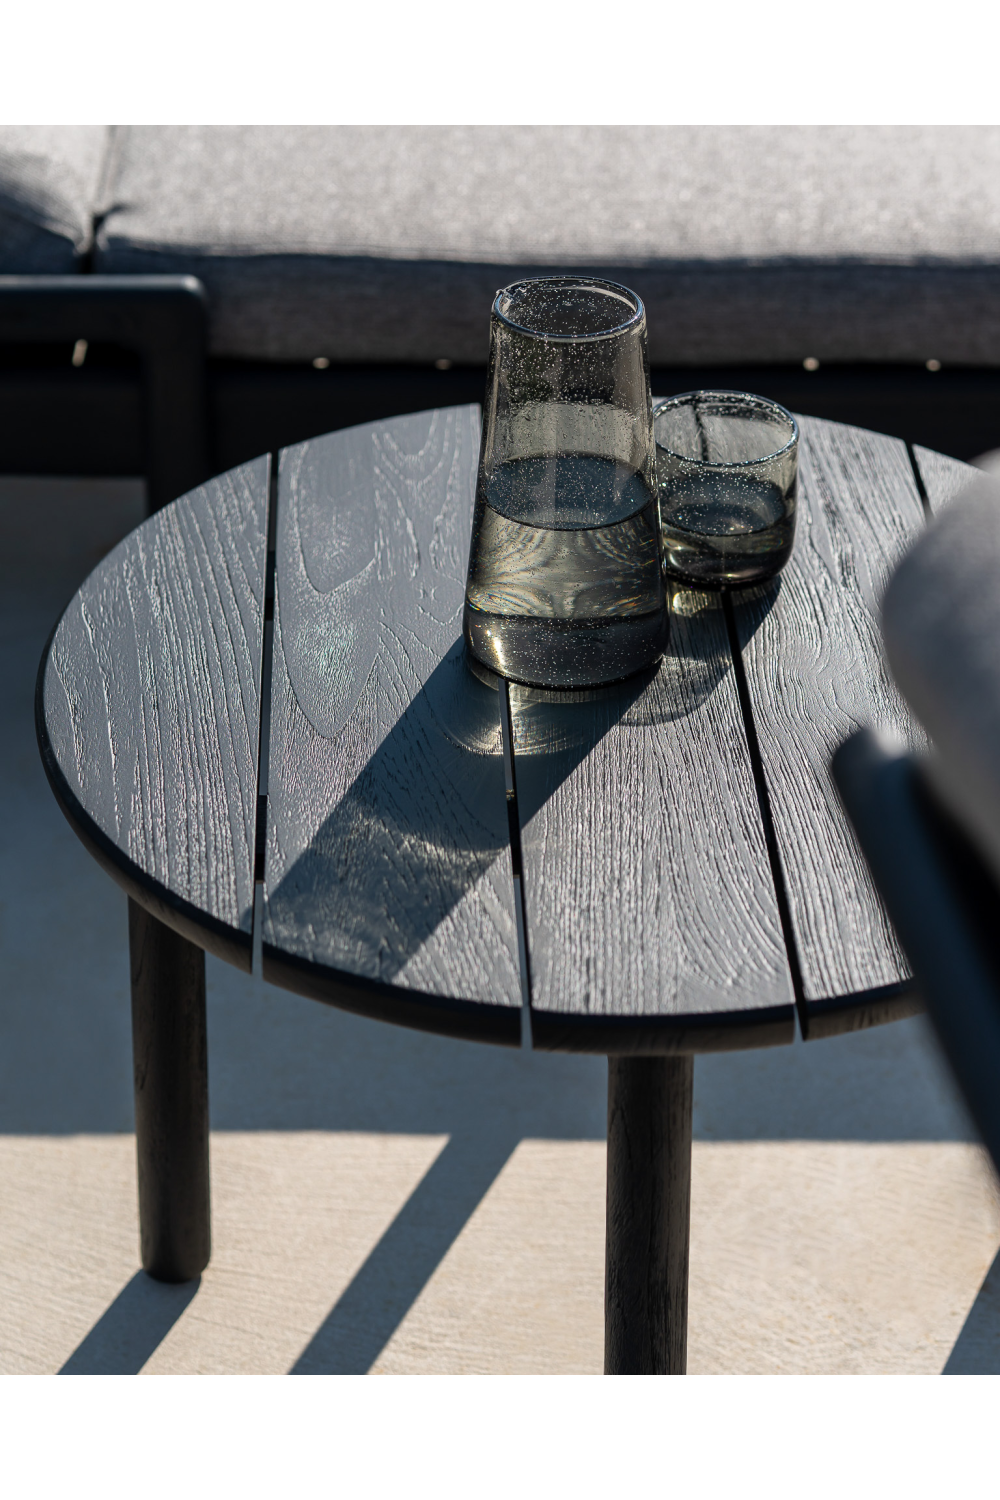 Black Round Slatted Outdoor Side Table | Ethnicraft Quatro | Oroa.com